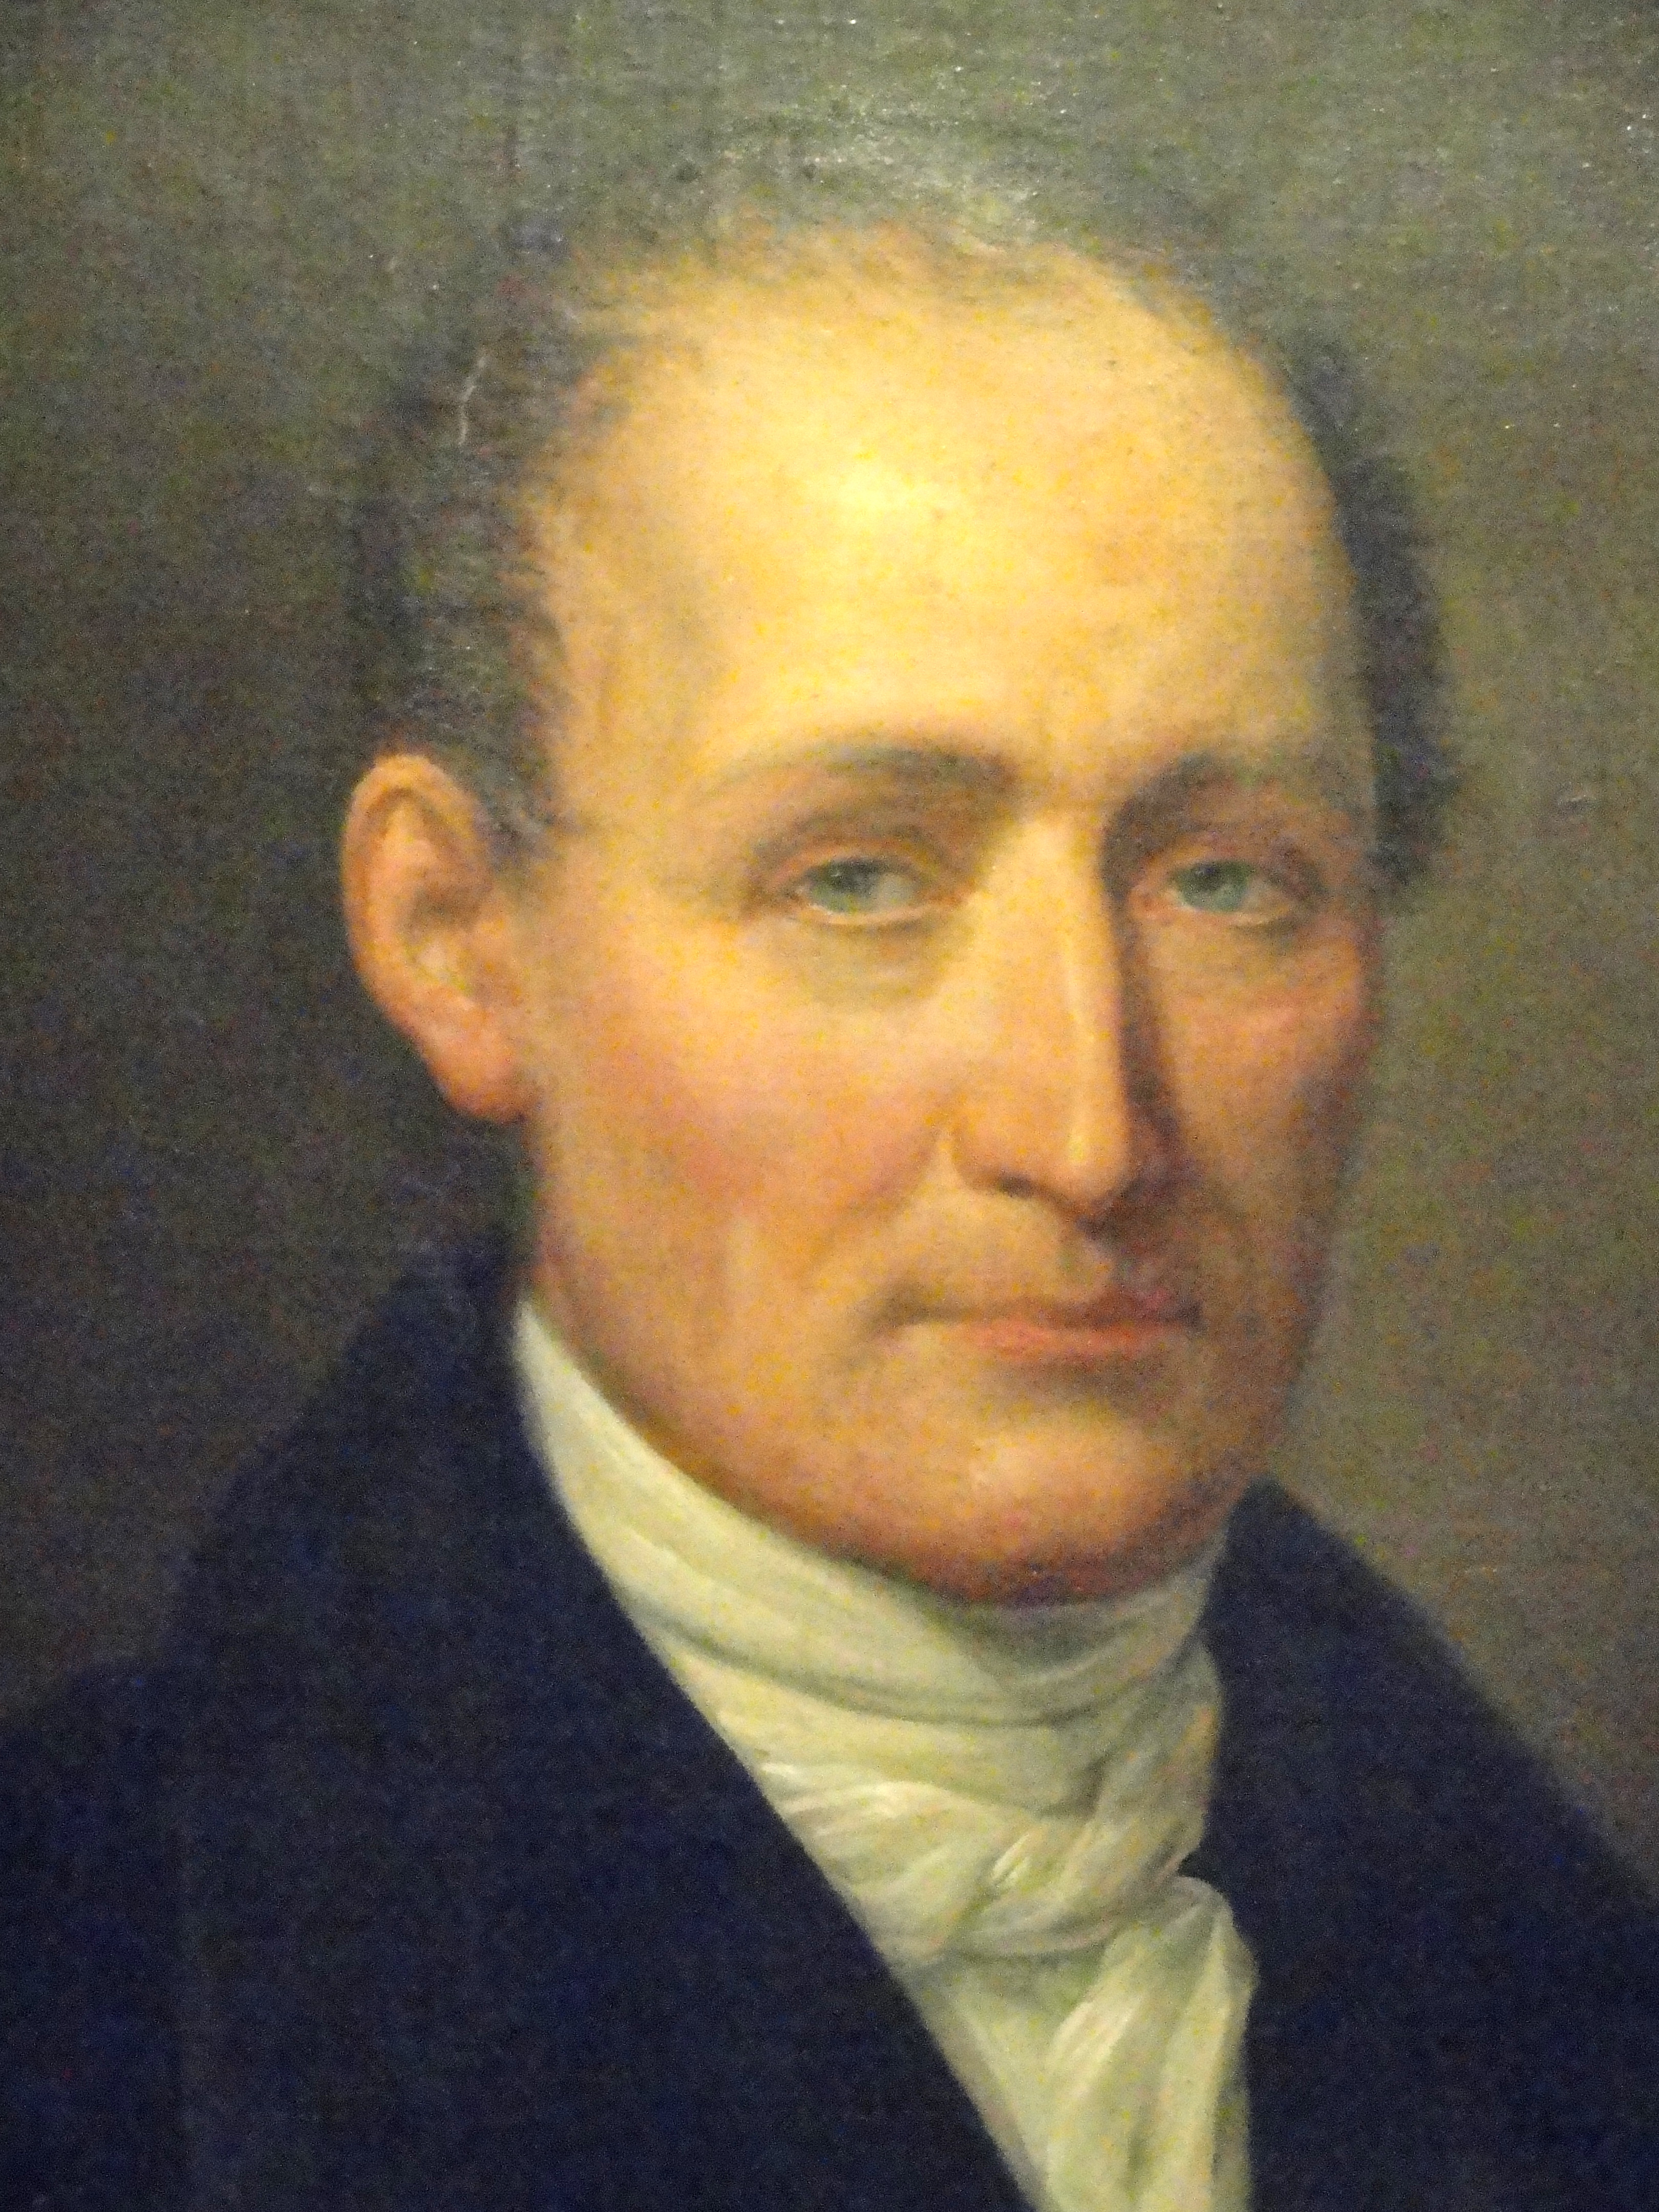 Image of Joseph Nicéphore Niépce from Wikidata